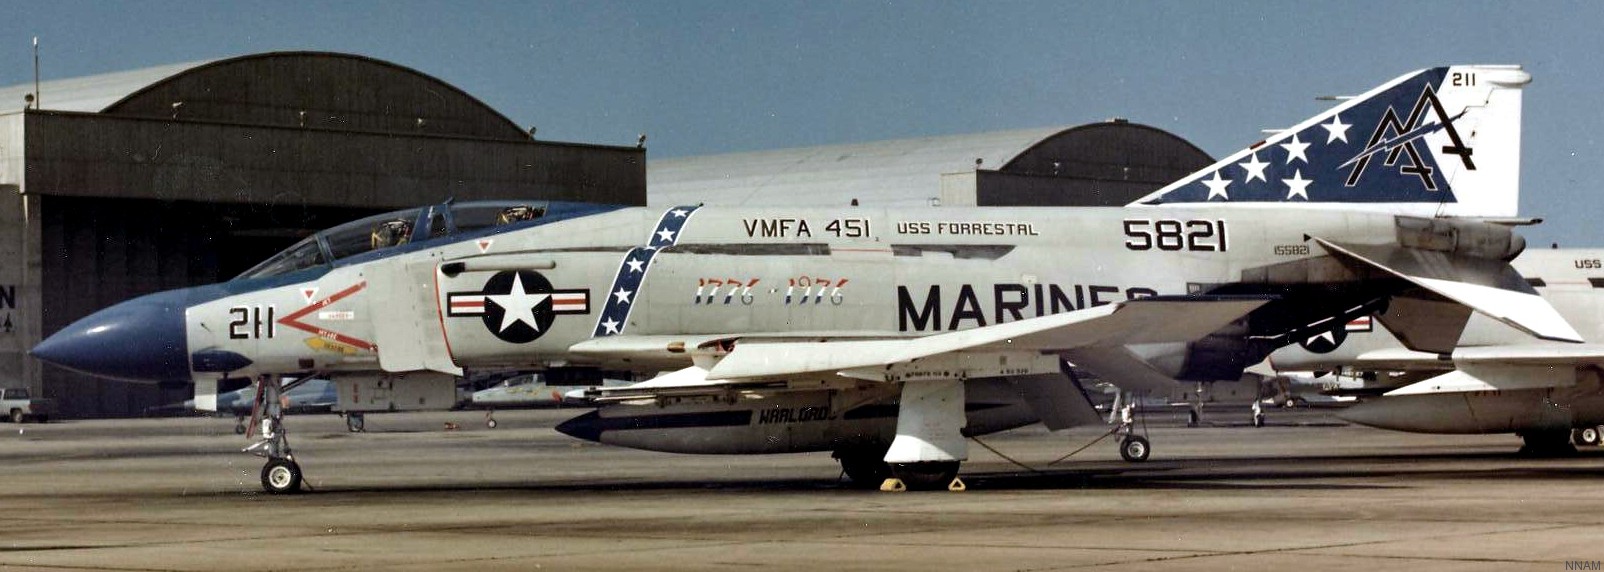 vmfa-451 warlords marine fighter attack squadron usmc f-4j phantom cvw-17 uss forrestal cv-59 04